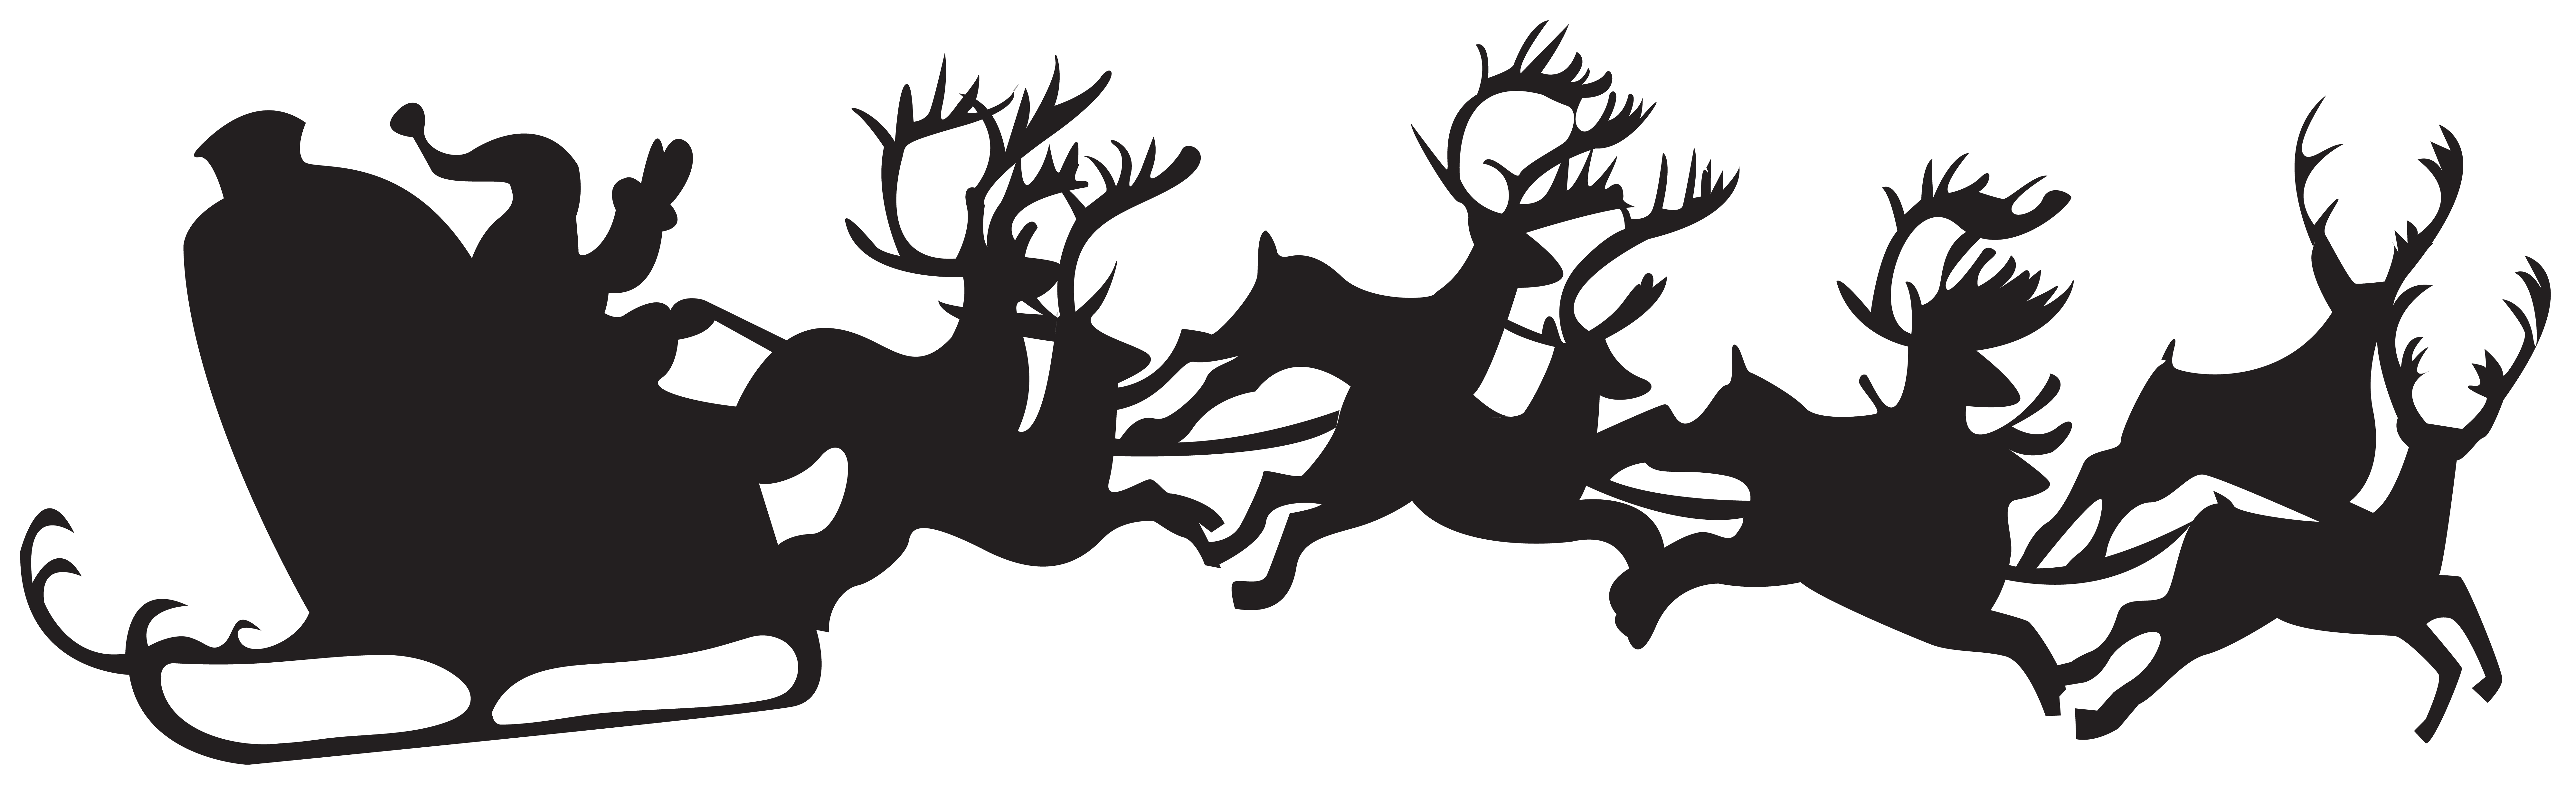 santa sleigh silhouette png - Clip Art Library